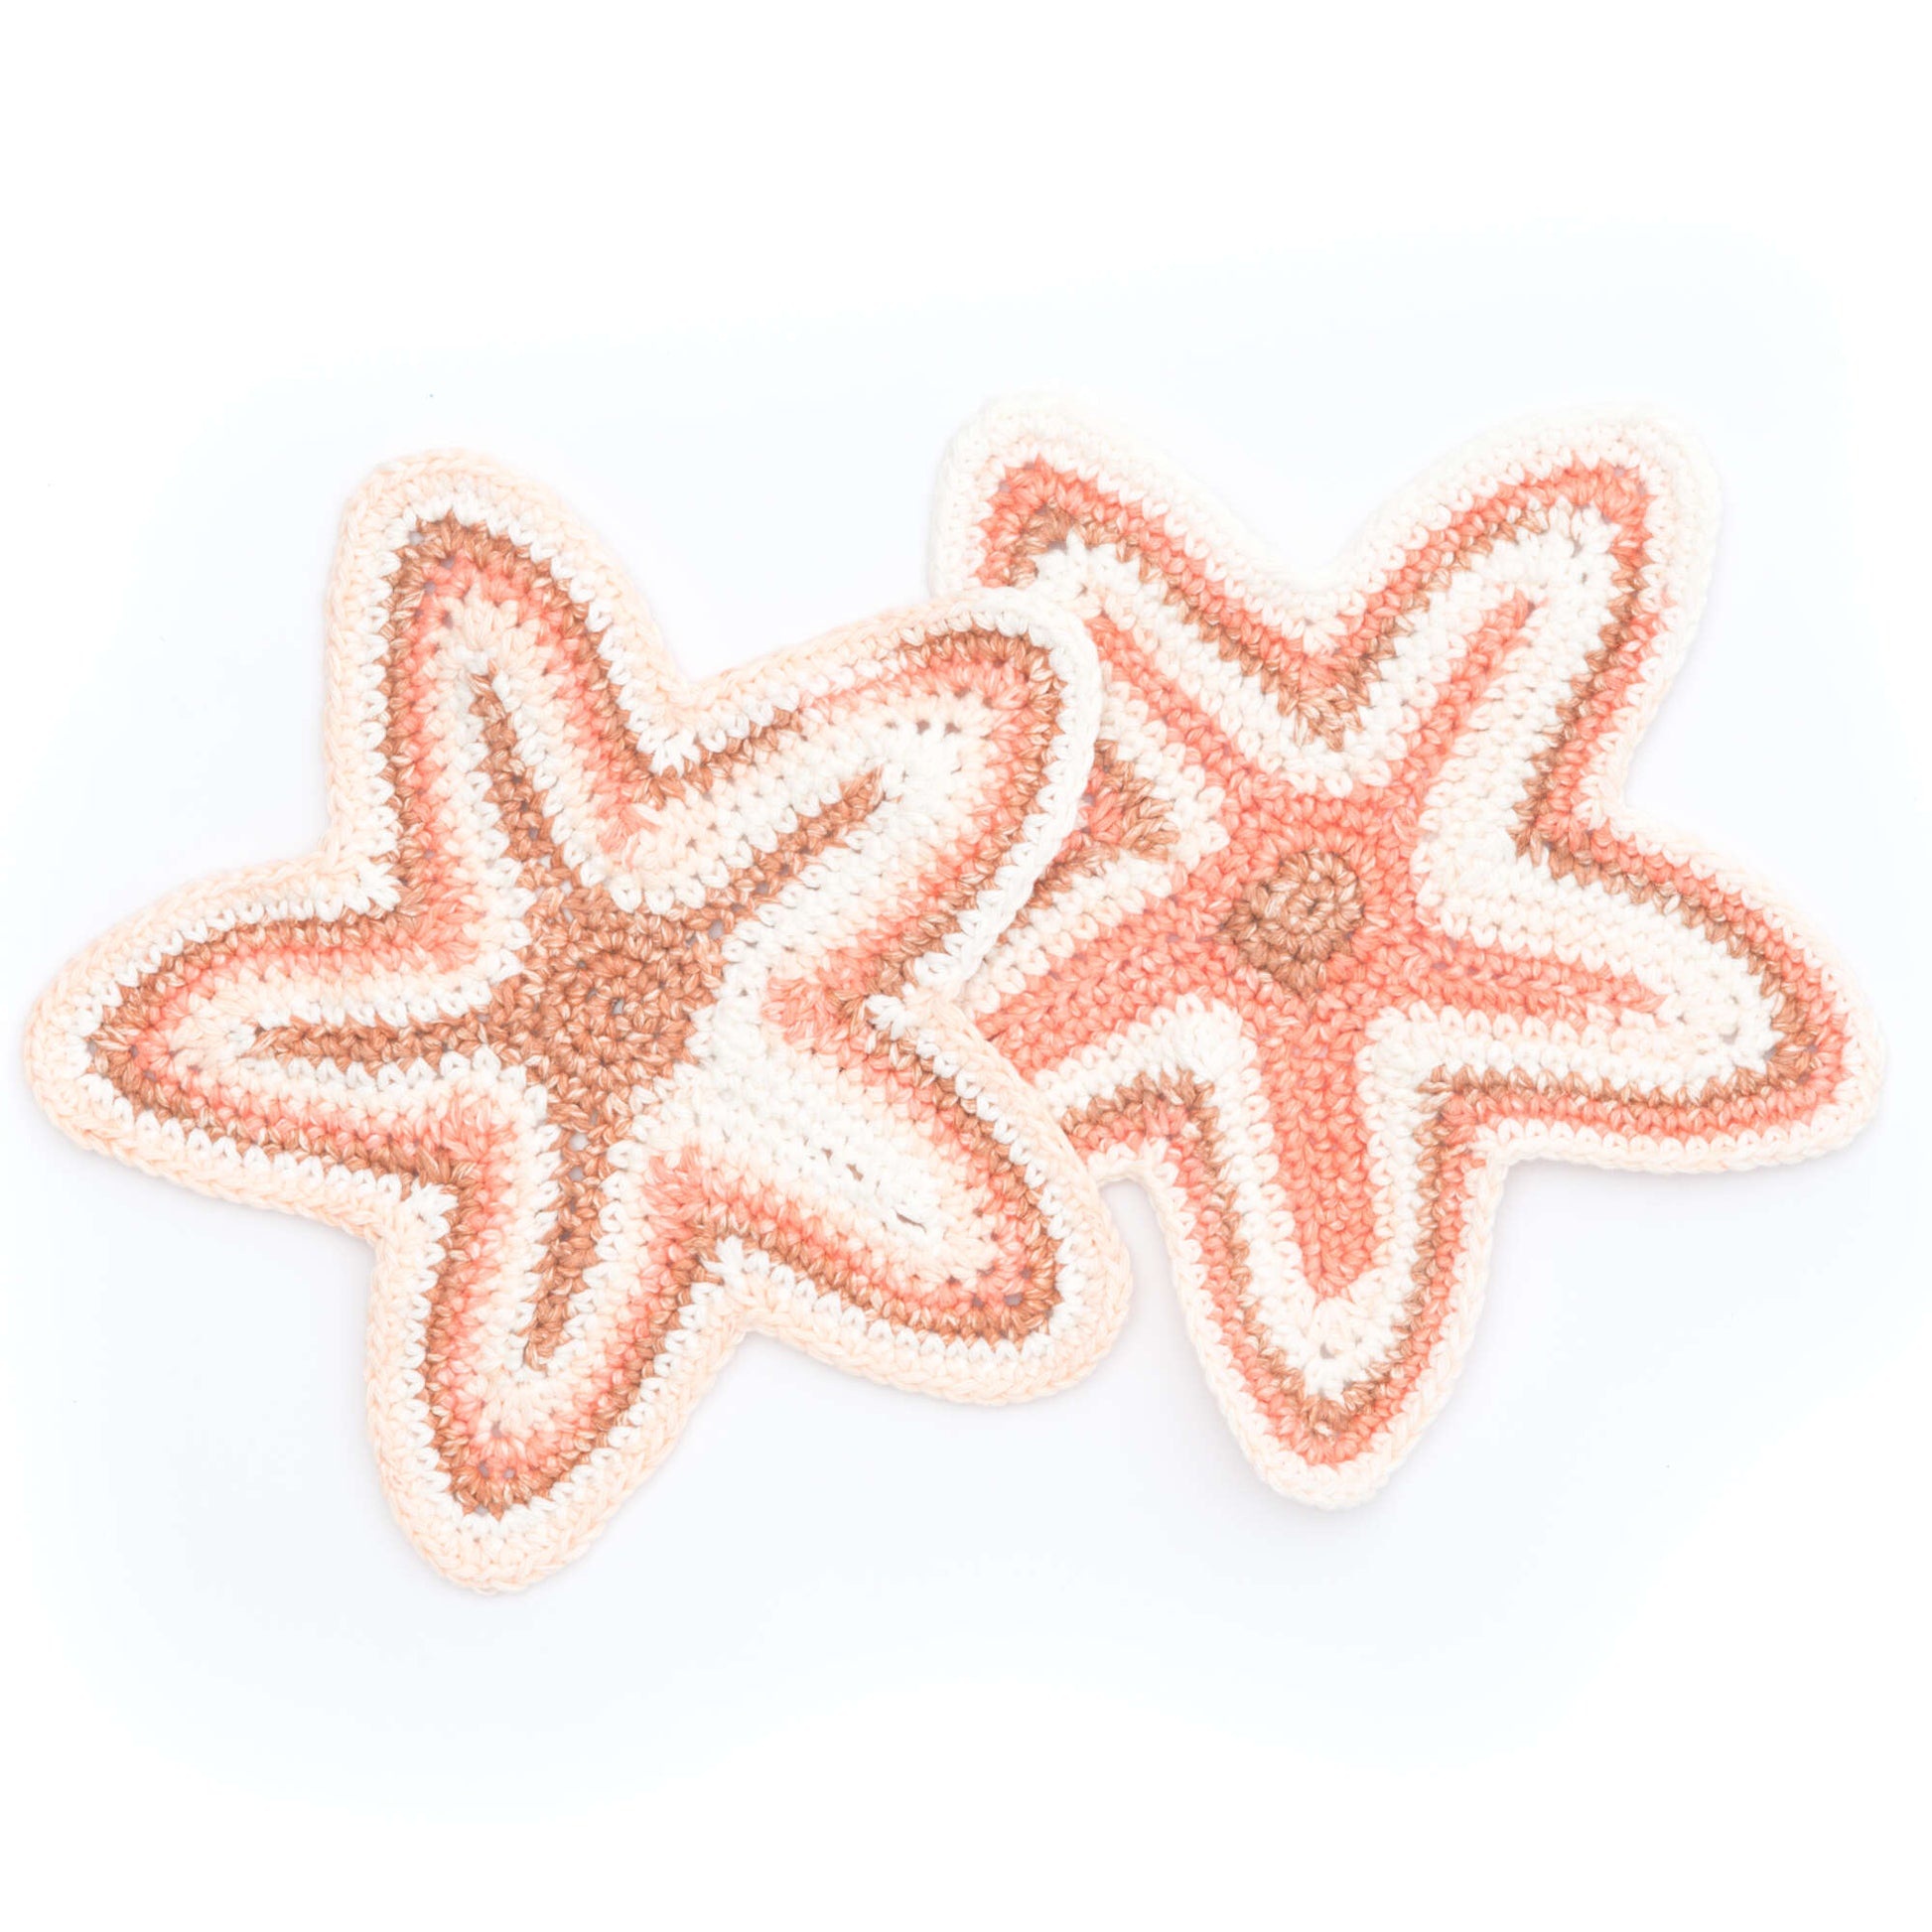 Red Heart Starfish Dishcloths Pattern